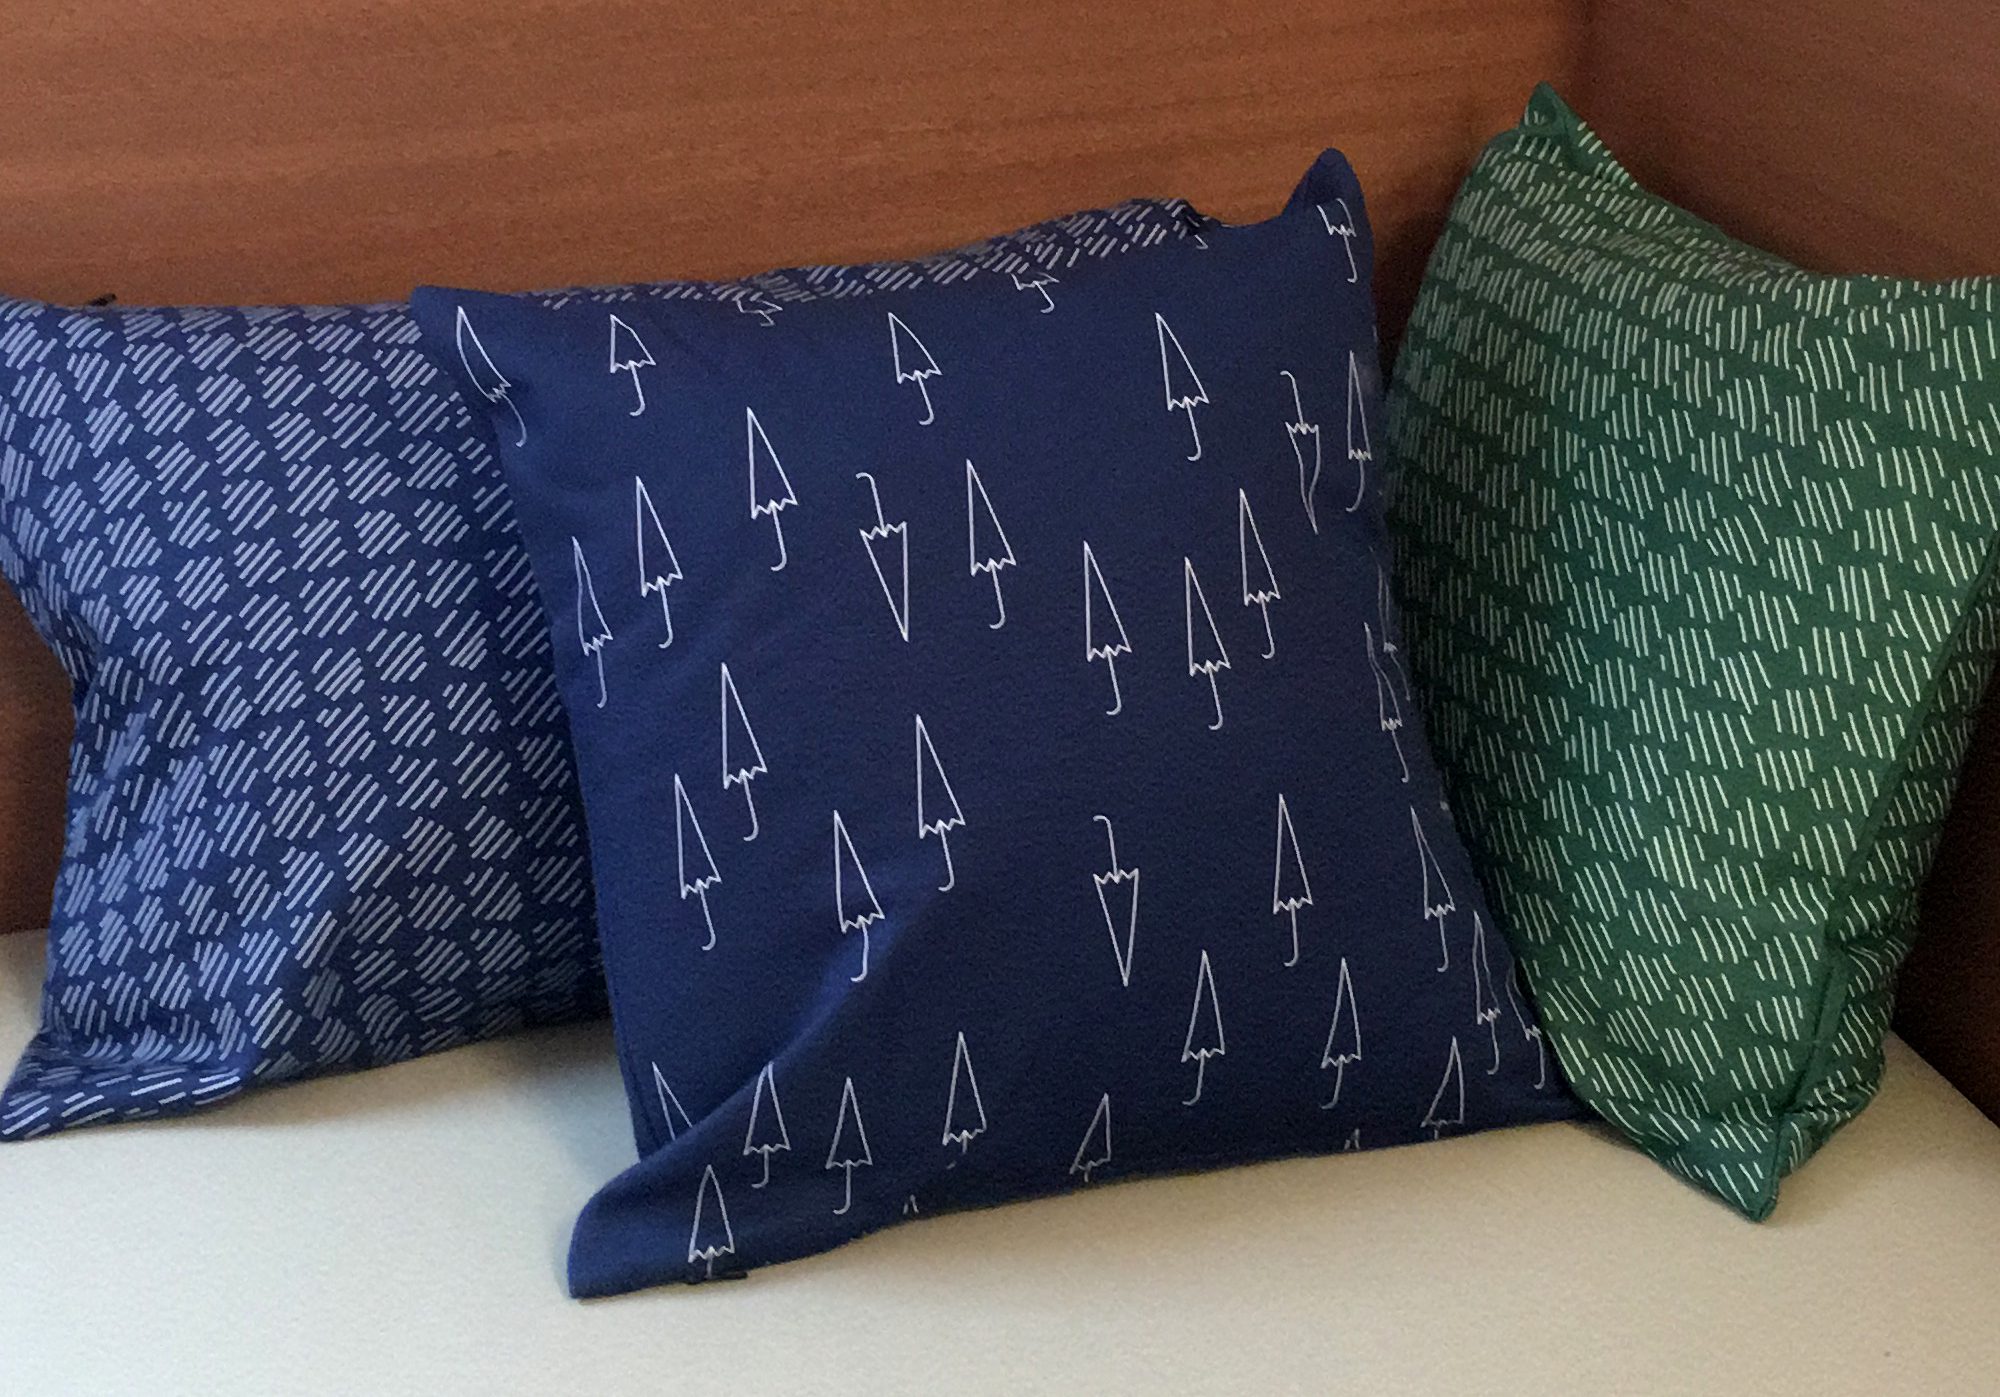 Three printed cushions